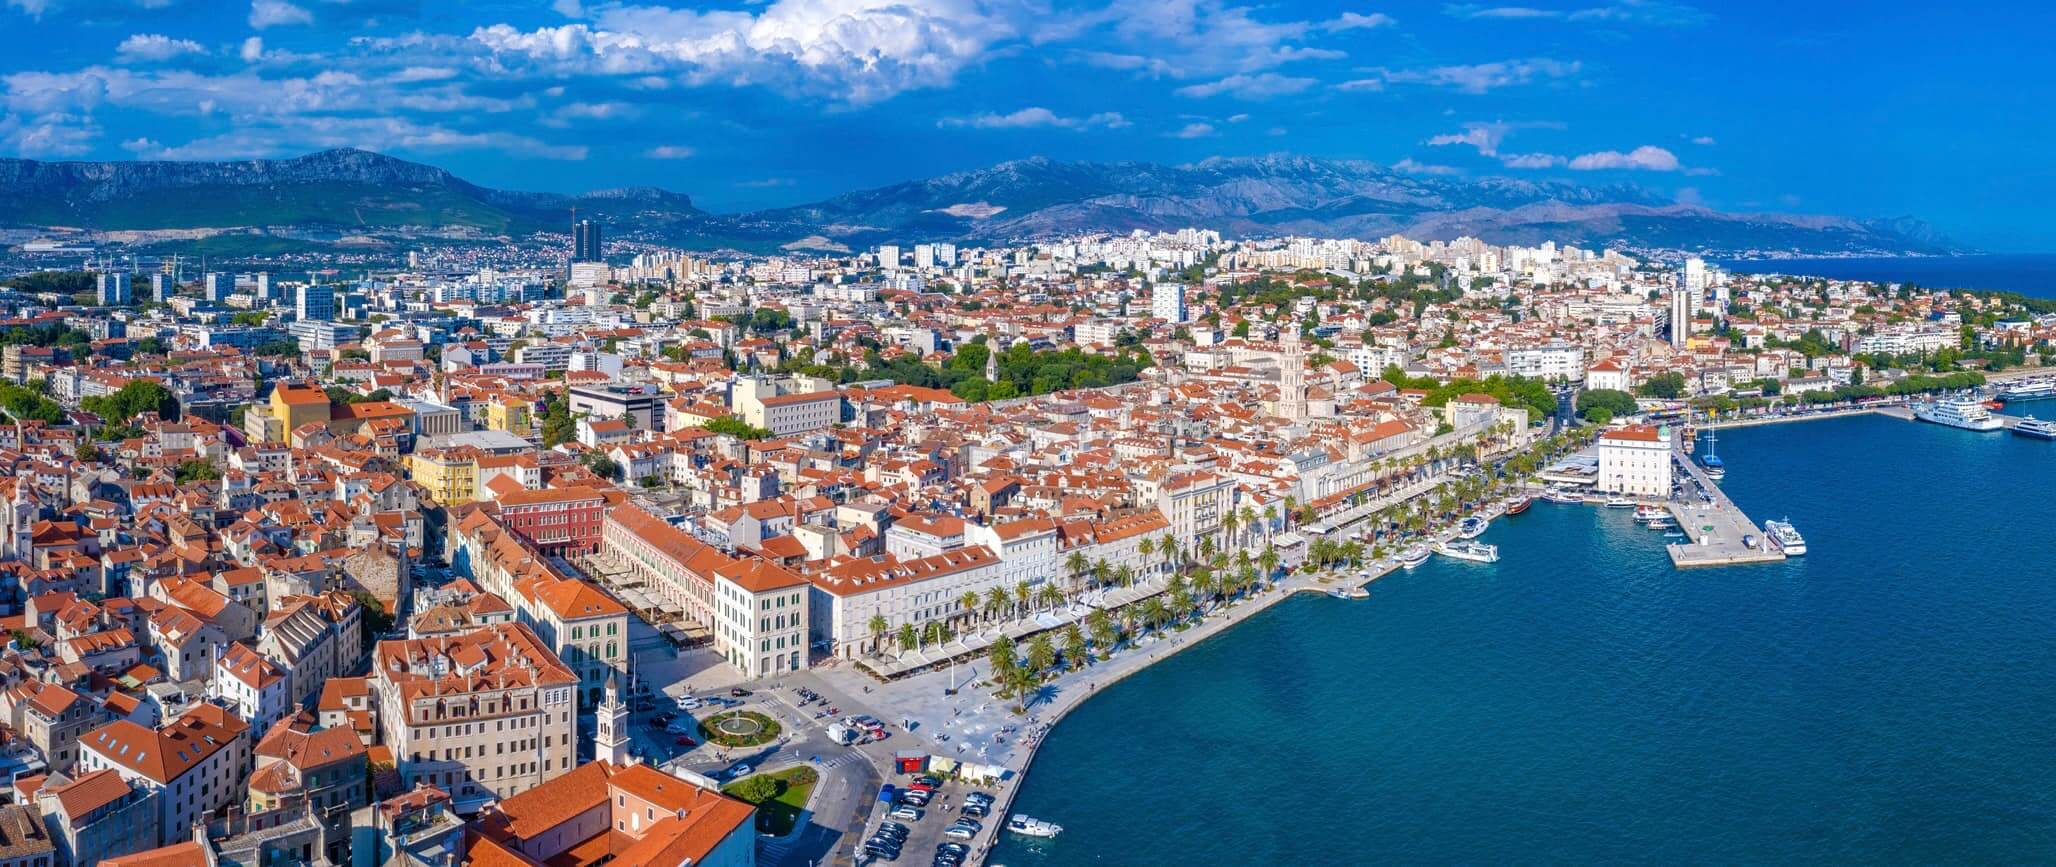 12 Best Hotels in Split Croatia - 2023 Guide to Where to Stay – We Seek  Travel